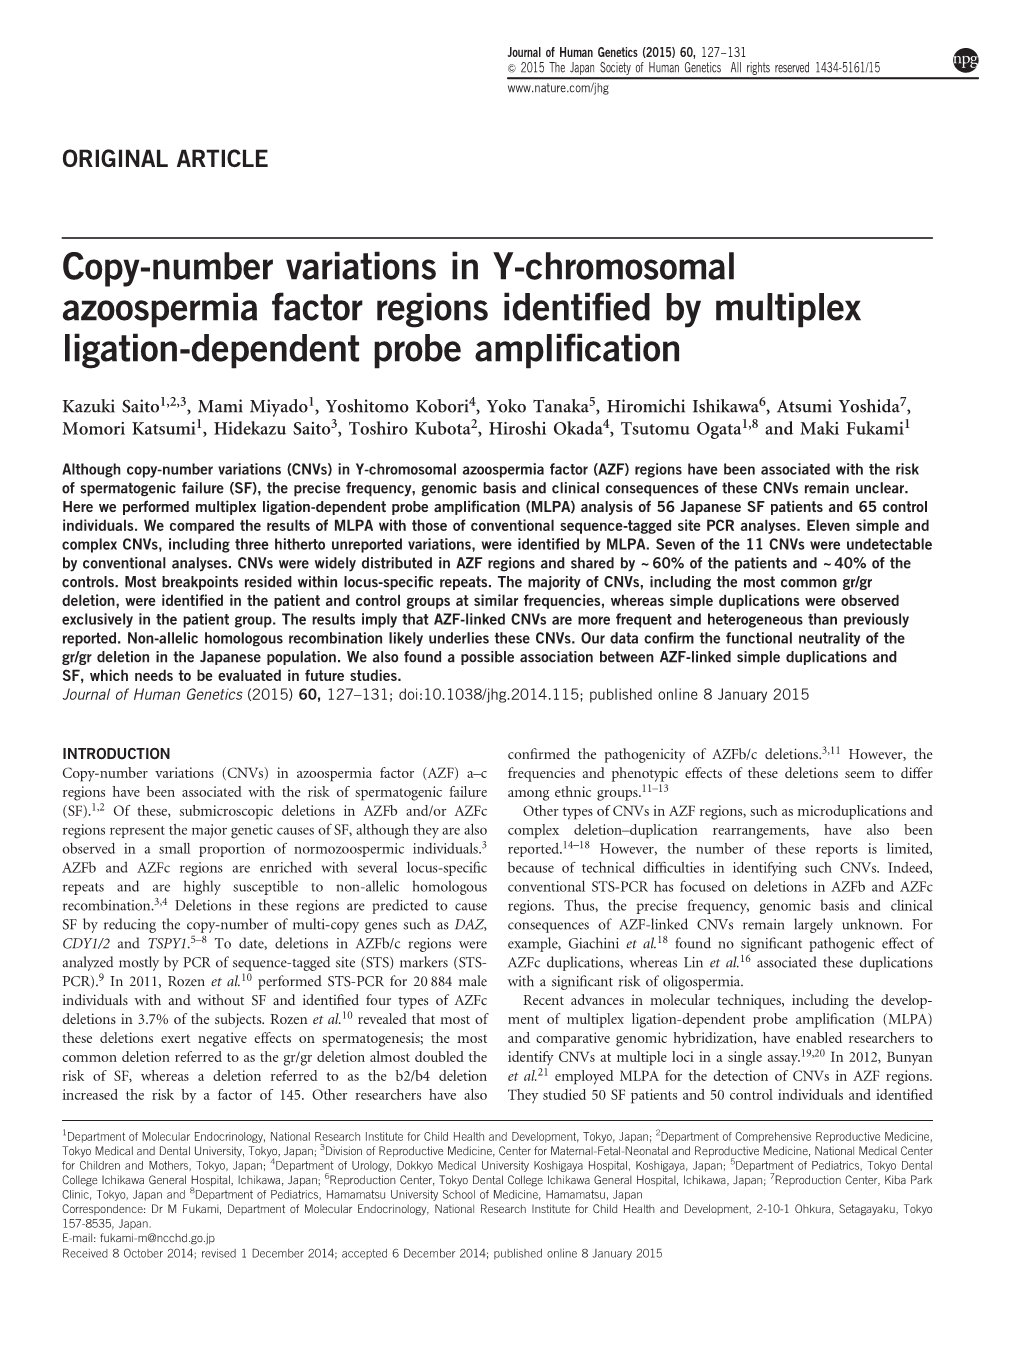 Copy-Number Variations in Y-Chromosomal Azoospermia Factor Regions Identiﬁed by Multiplex Ligation-Dependent Probe Ampliﬁcation